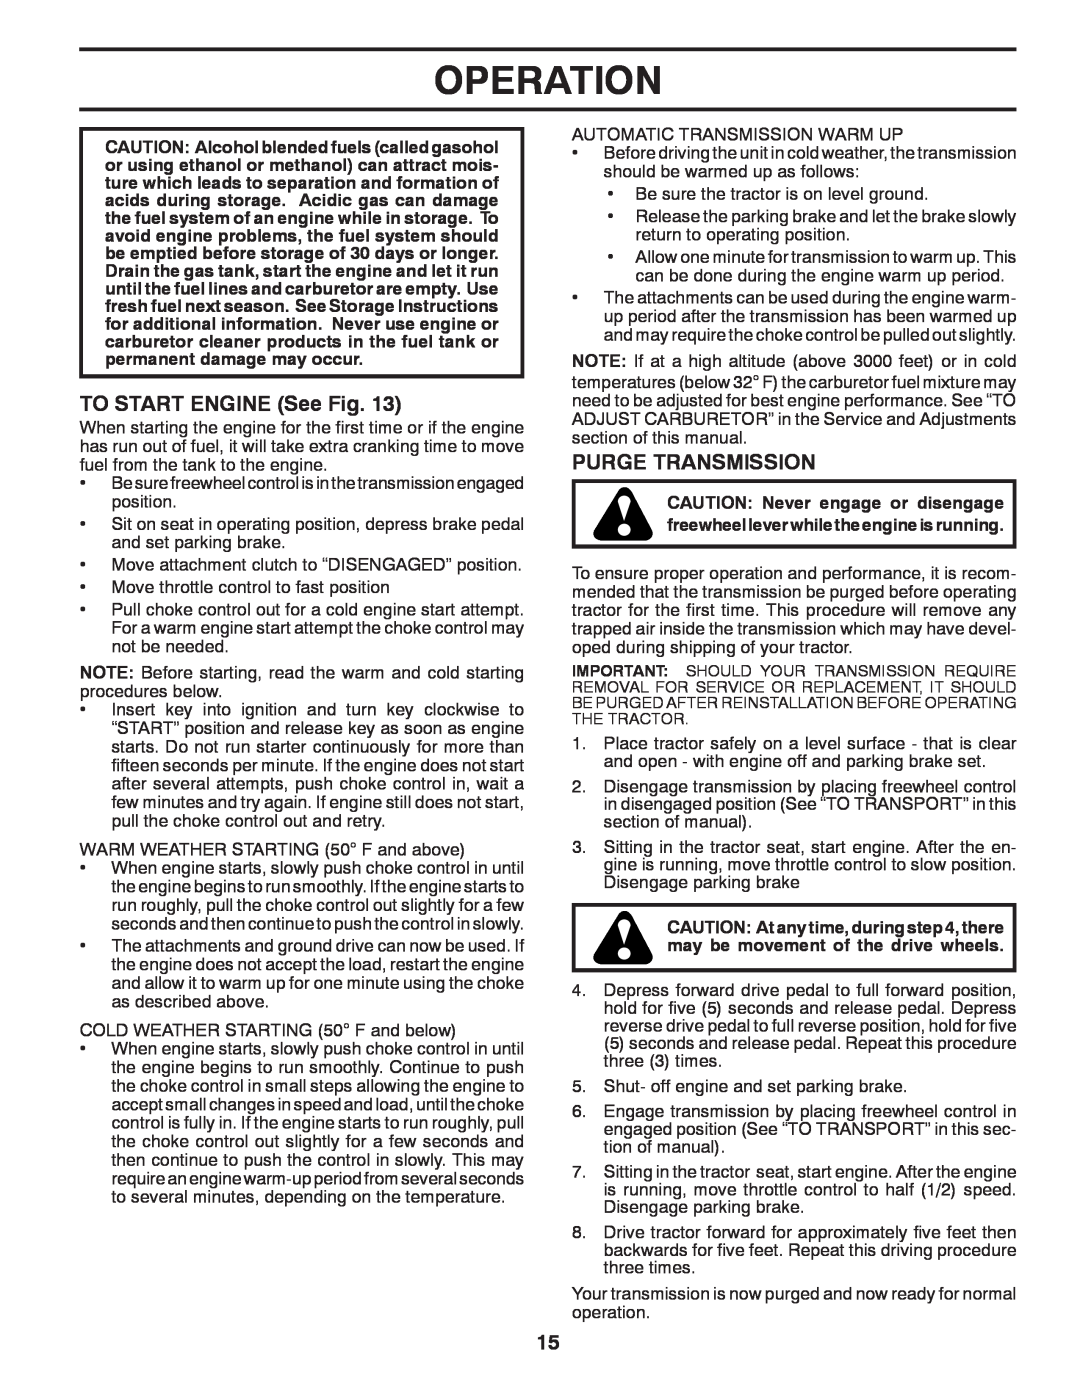 Poulan XT22H54 manual TO START ENGINE See Fig, Purge Transmission, Operation 